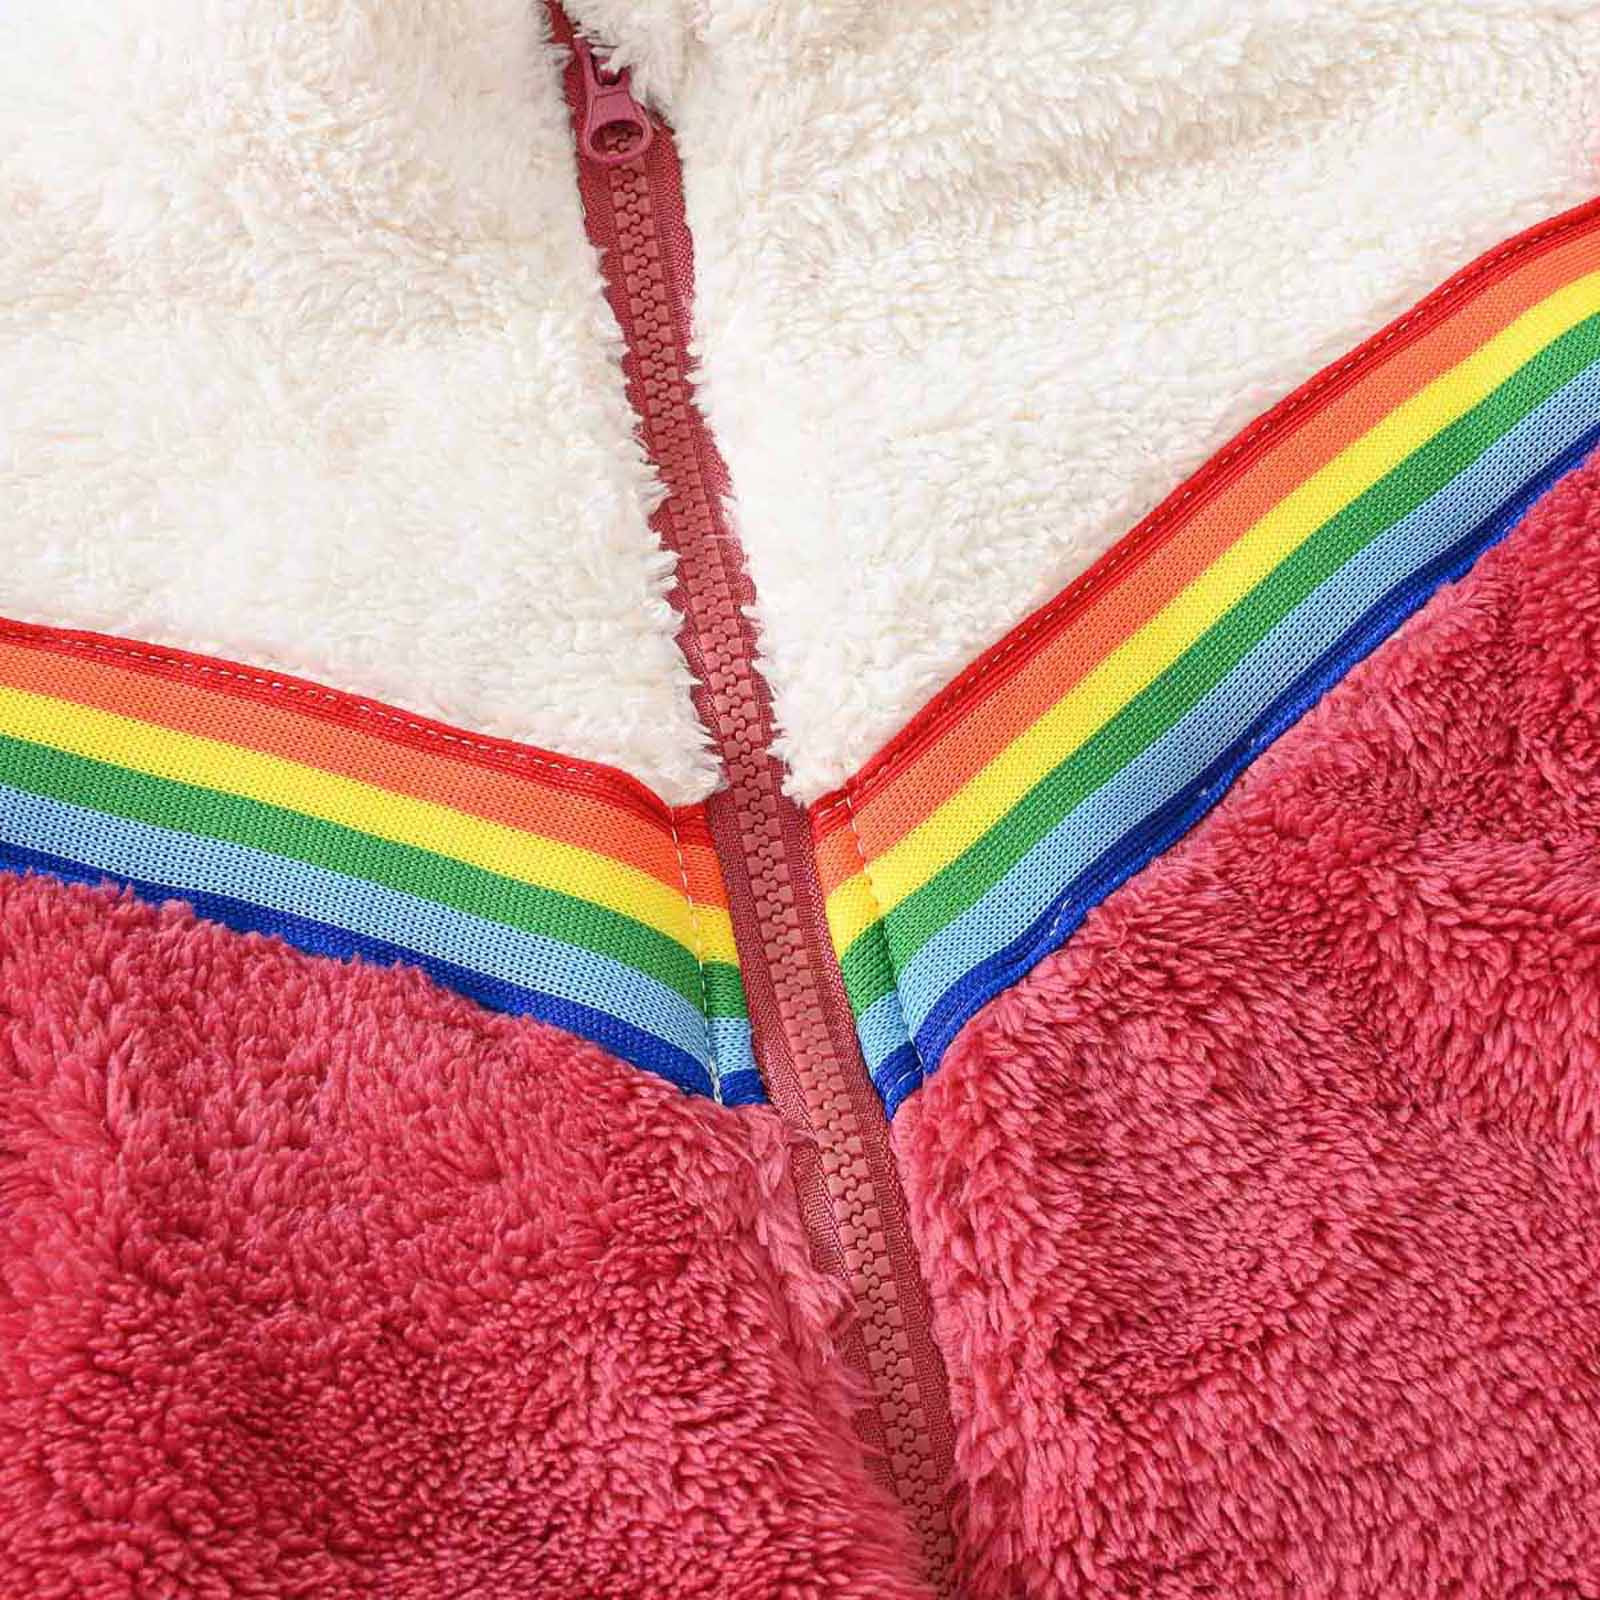 YYDGH Girls Zipper Jacket Fuzzy Sweatshirt Long Sleeve Casual Cozy Fleece Sherpa Outwear Coat Full-Zip Rainbow Jackets(Red,7-8 Years) - image 5 of 8